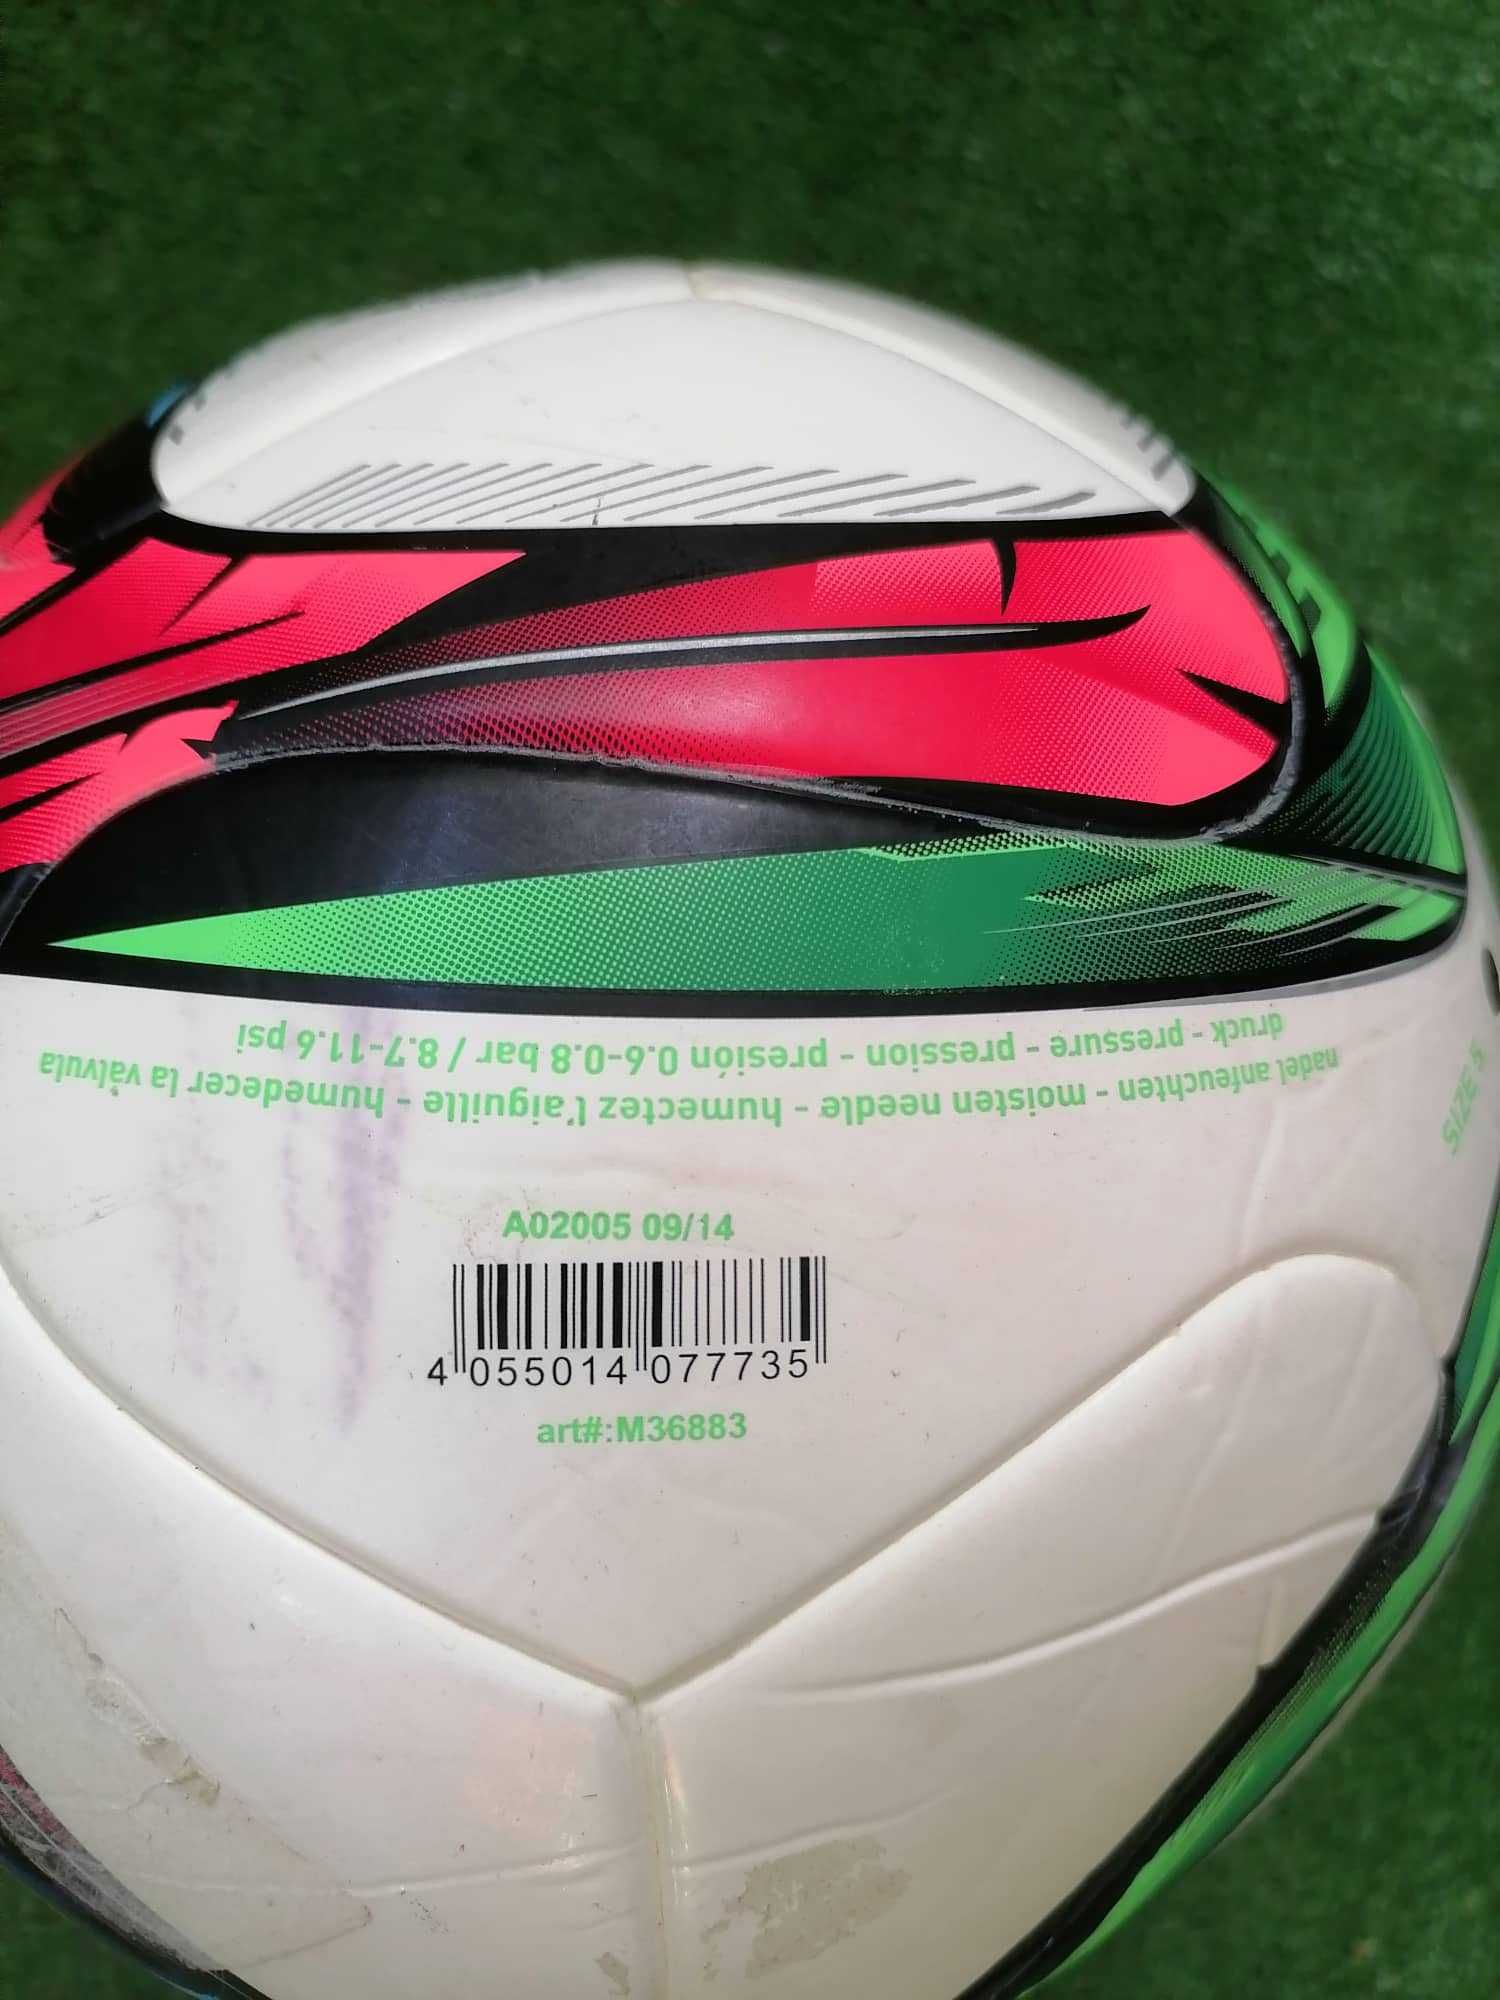 футболна топка adidas fifa 2007